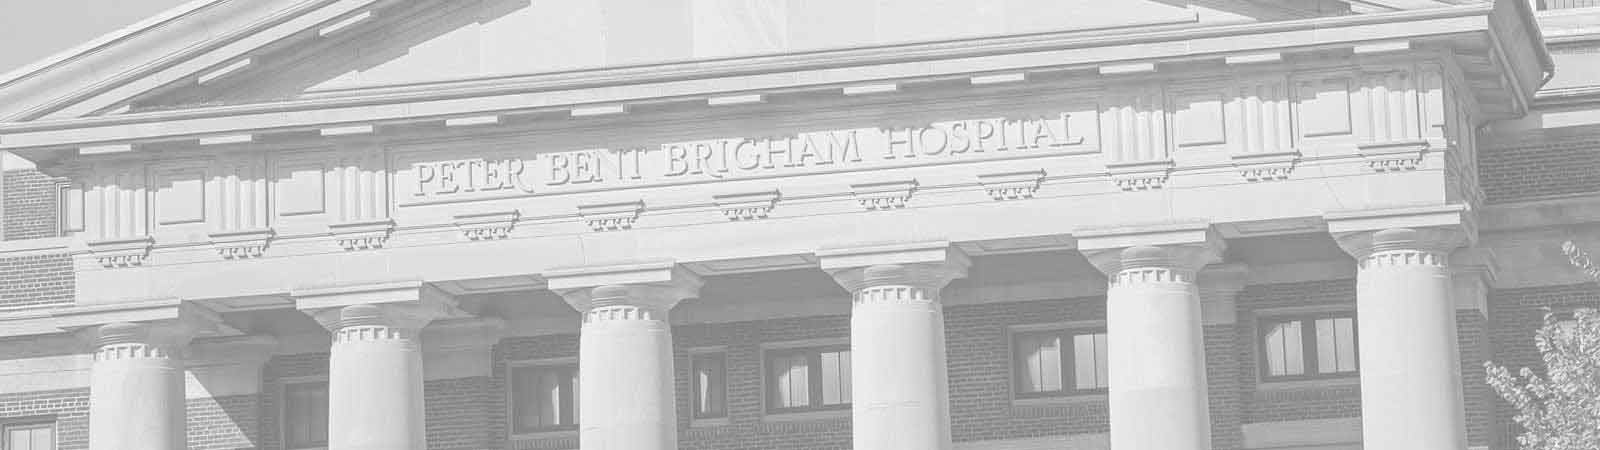 HARVARD / BRIGHAM AND WOMEN'S HOSPITAL